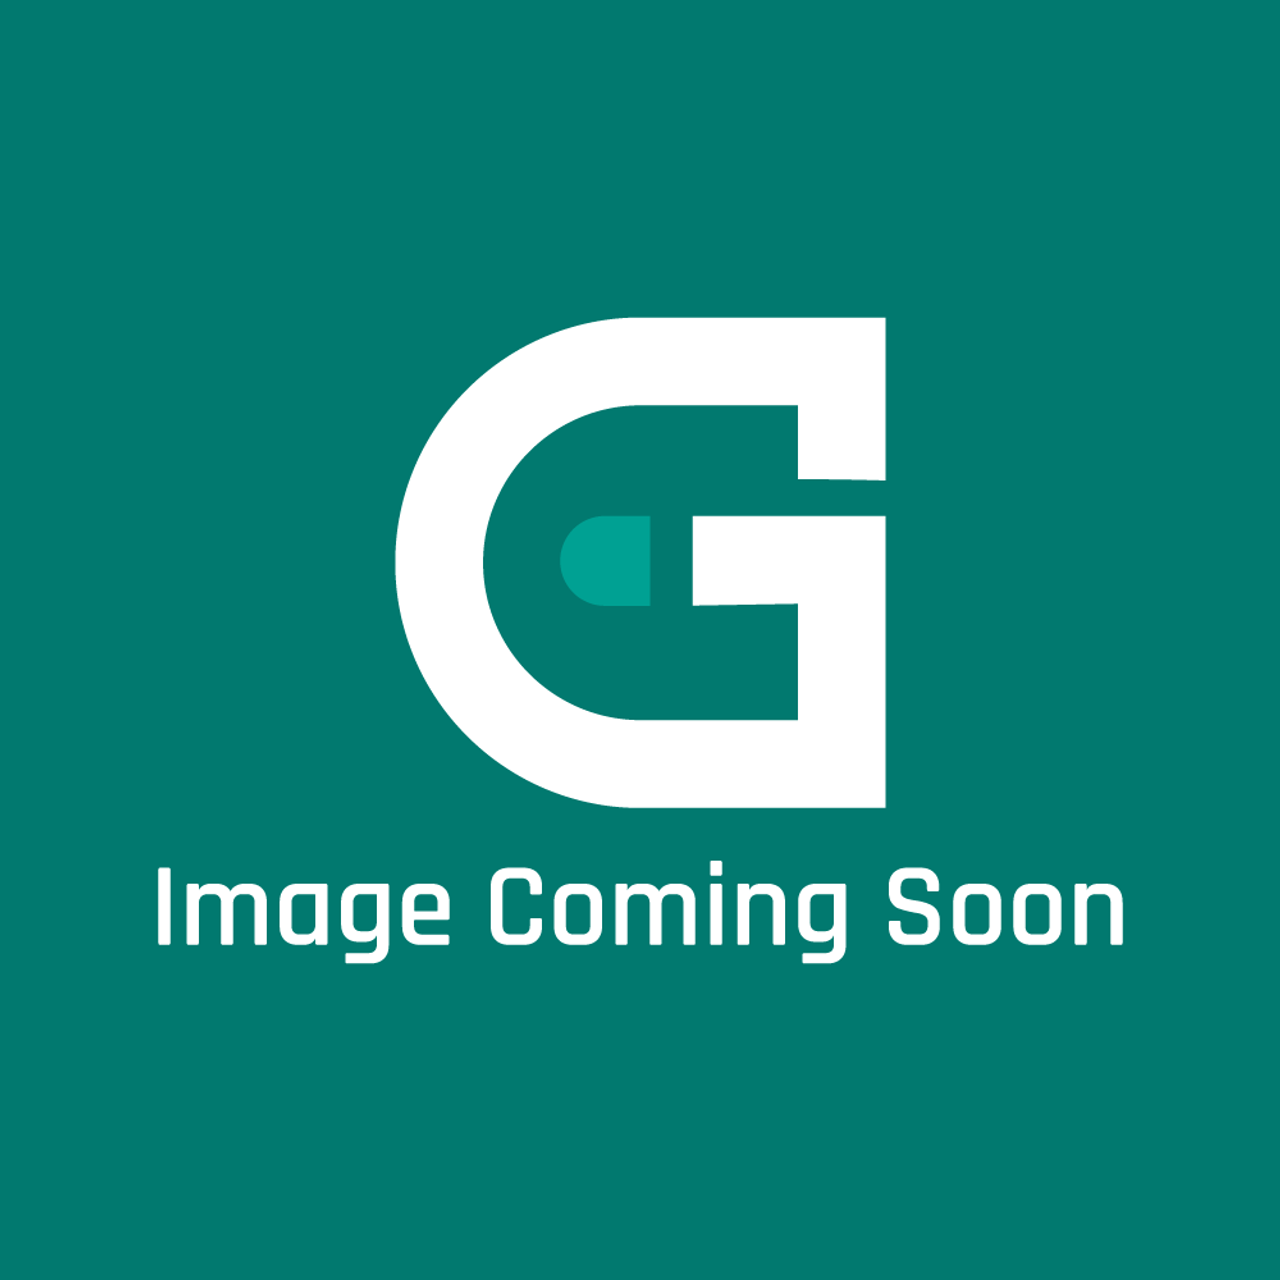 GE Appliances WD01X22135 - Speaker - Image Coming Soon!